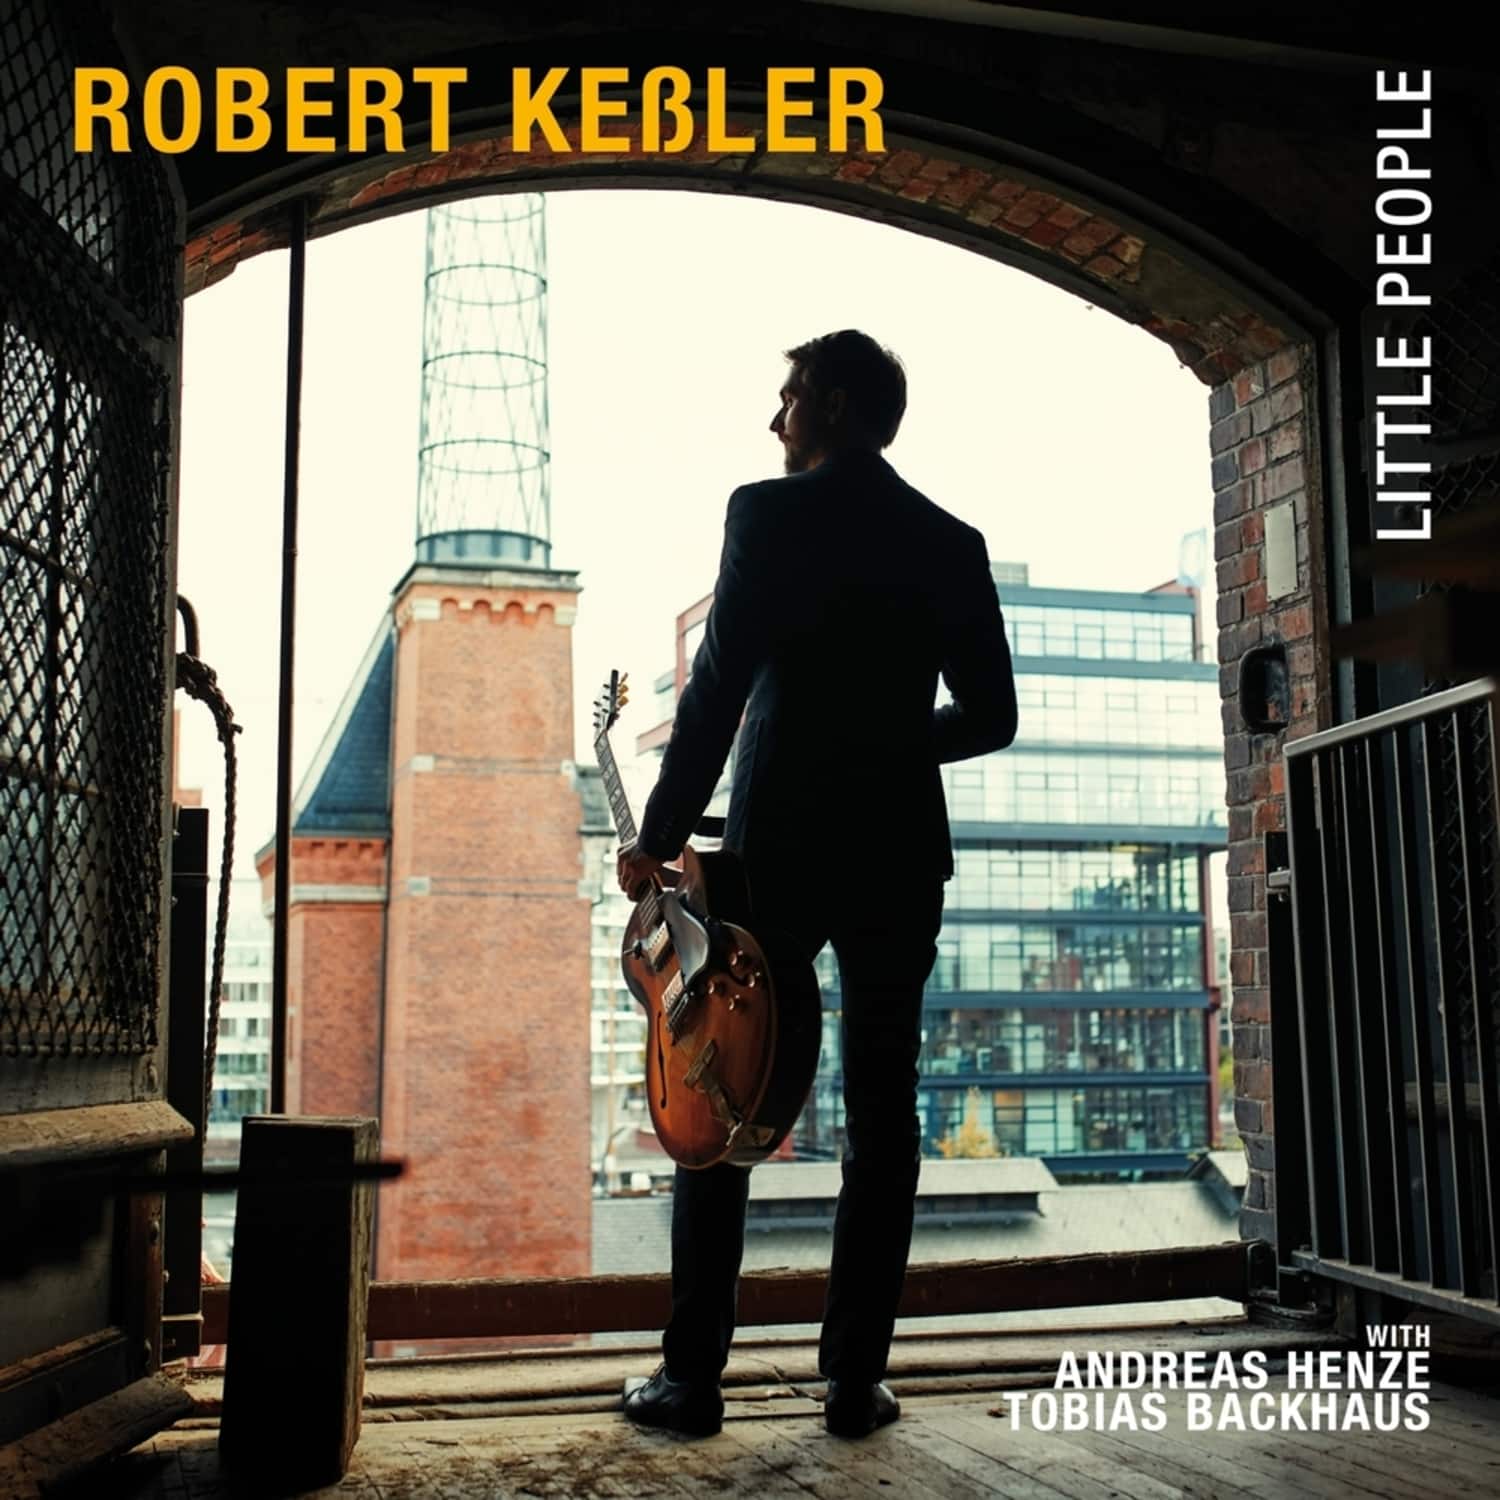 Robert Kessler - LITTLE PEOPLE 